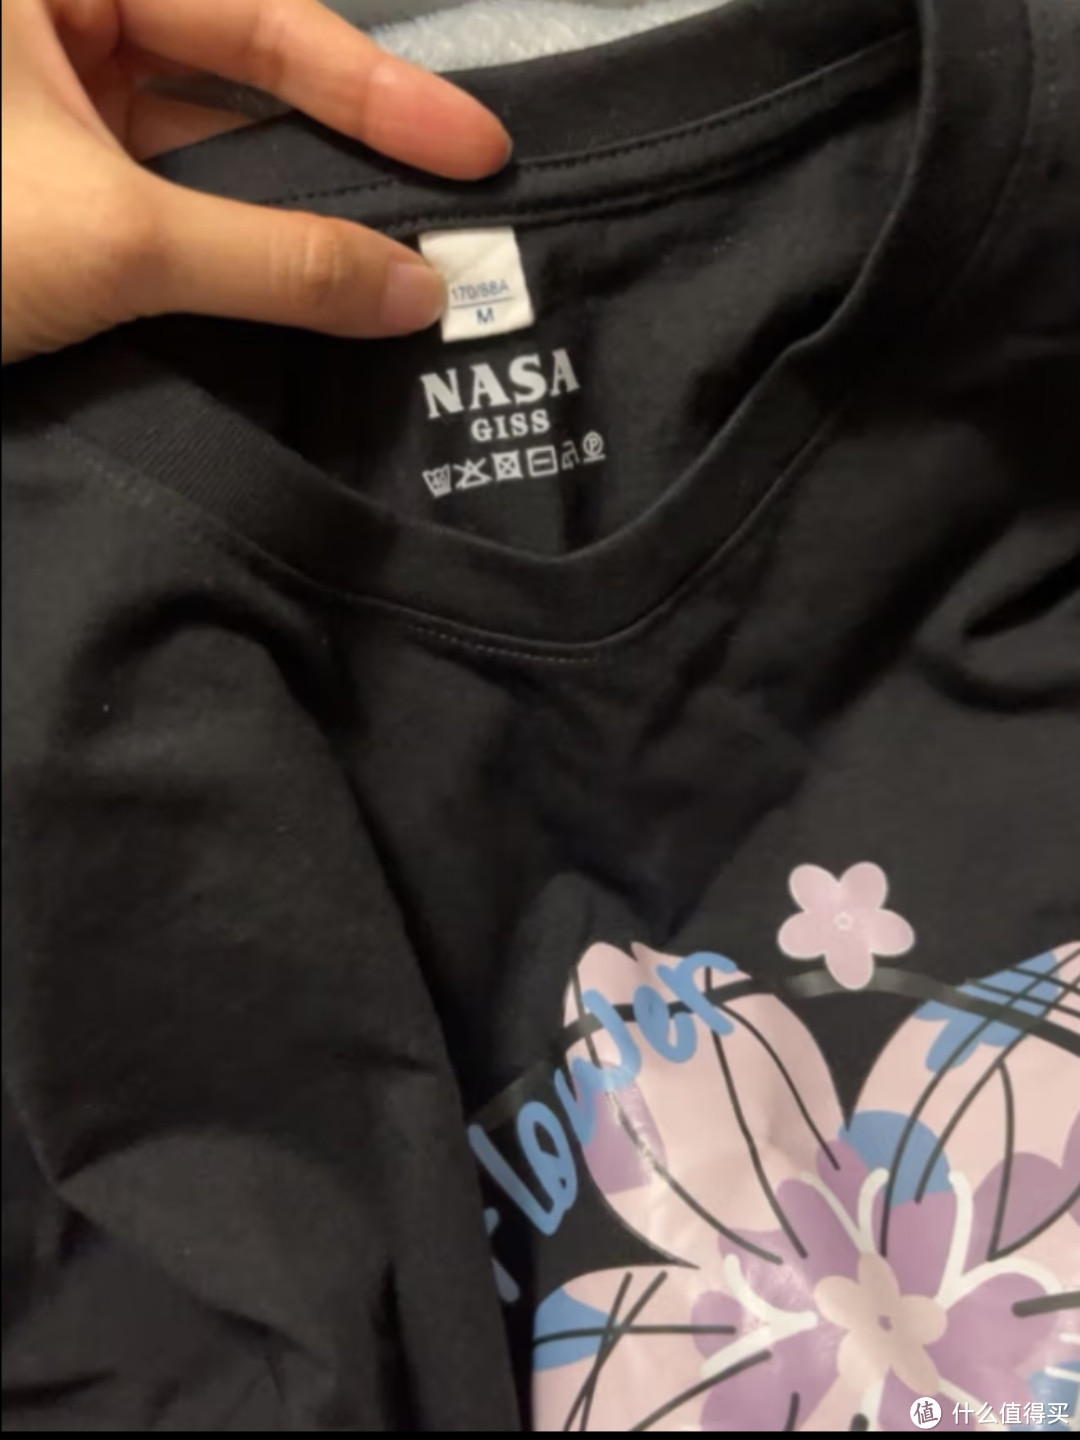 NASA GISS官方短袖t恤男纯棉oversize情侣款ins上衣潮牌夏季宽松卡通体恤衫 黑色 L体重130-150斤